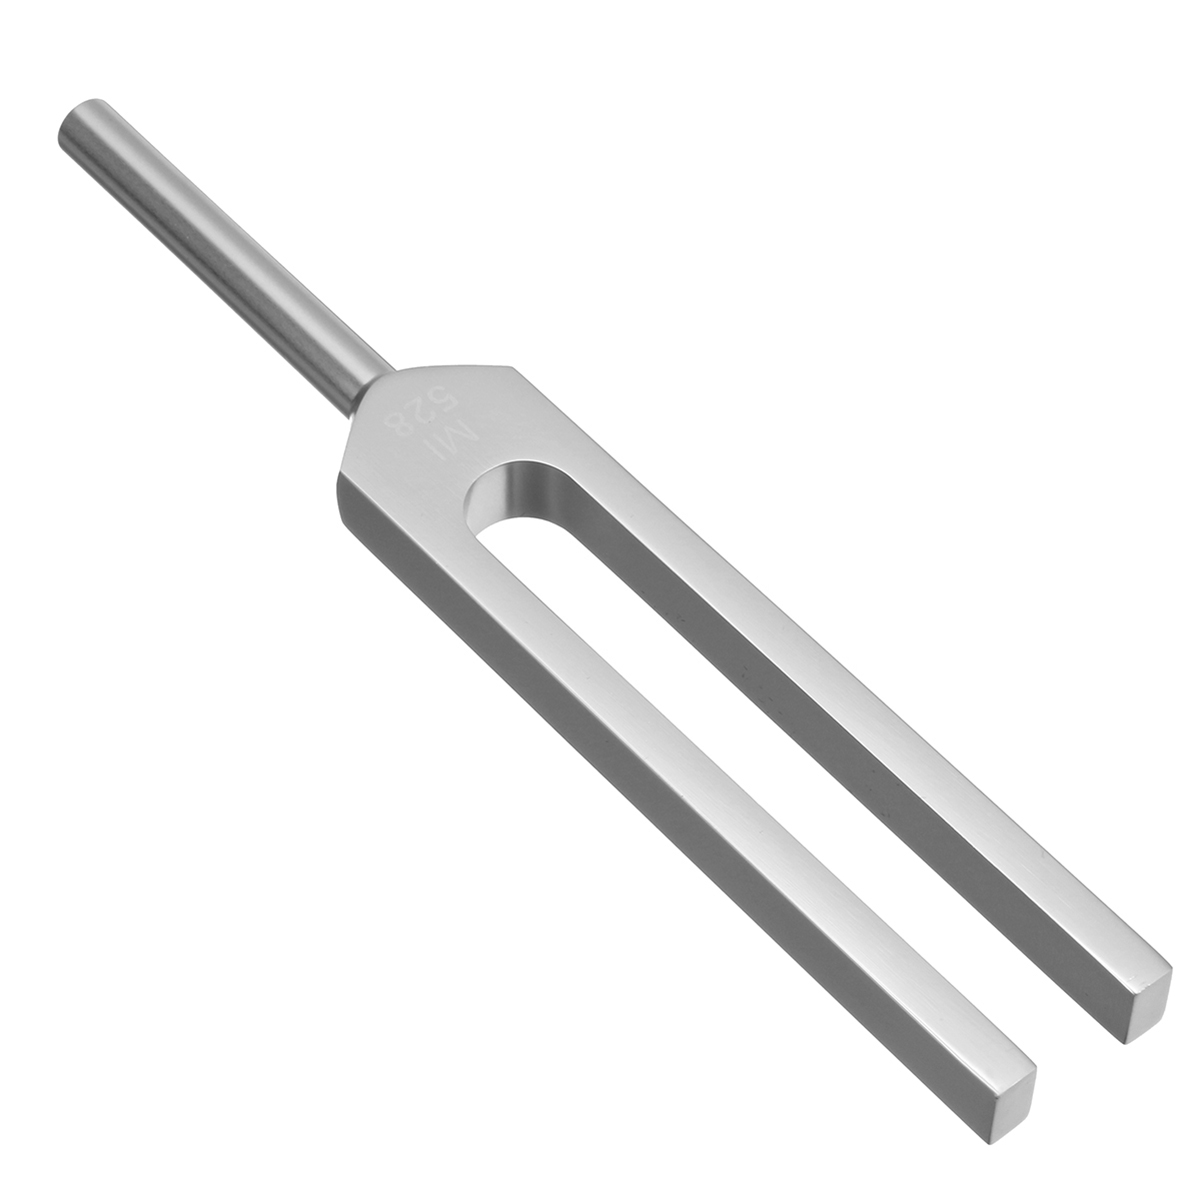 528HZ-Aluminum-Tuning-Fork-Chakra-Hammer-Ball-Diagnostic-Mallet-Set-1326579-6